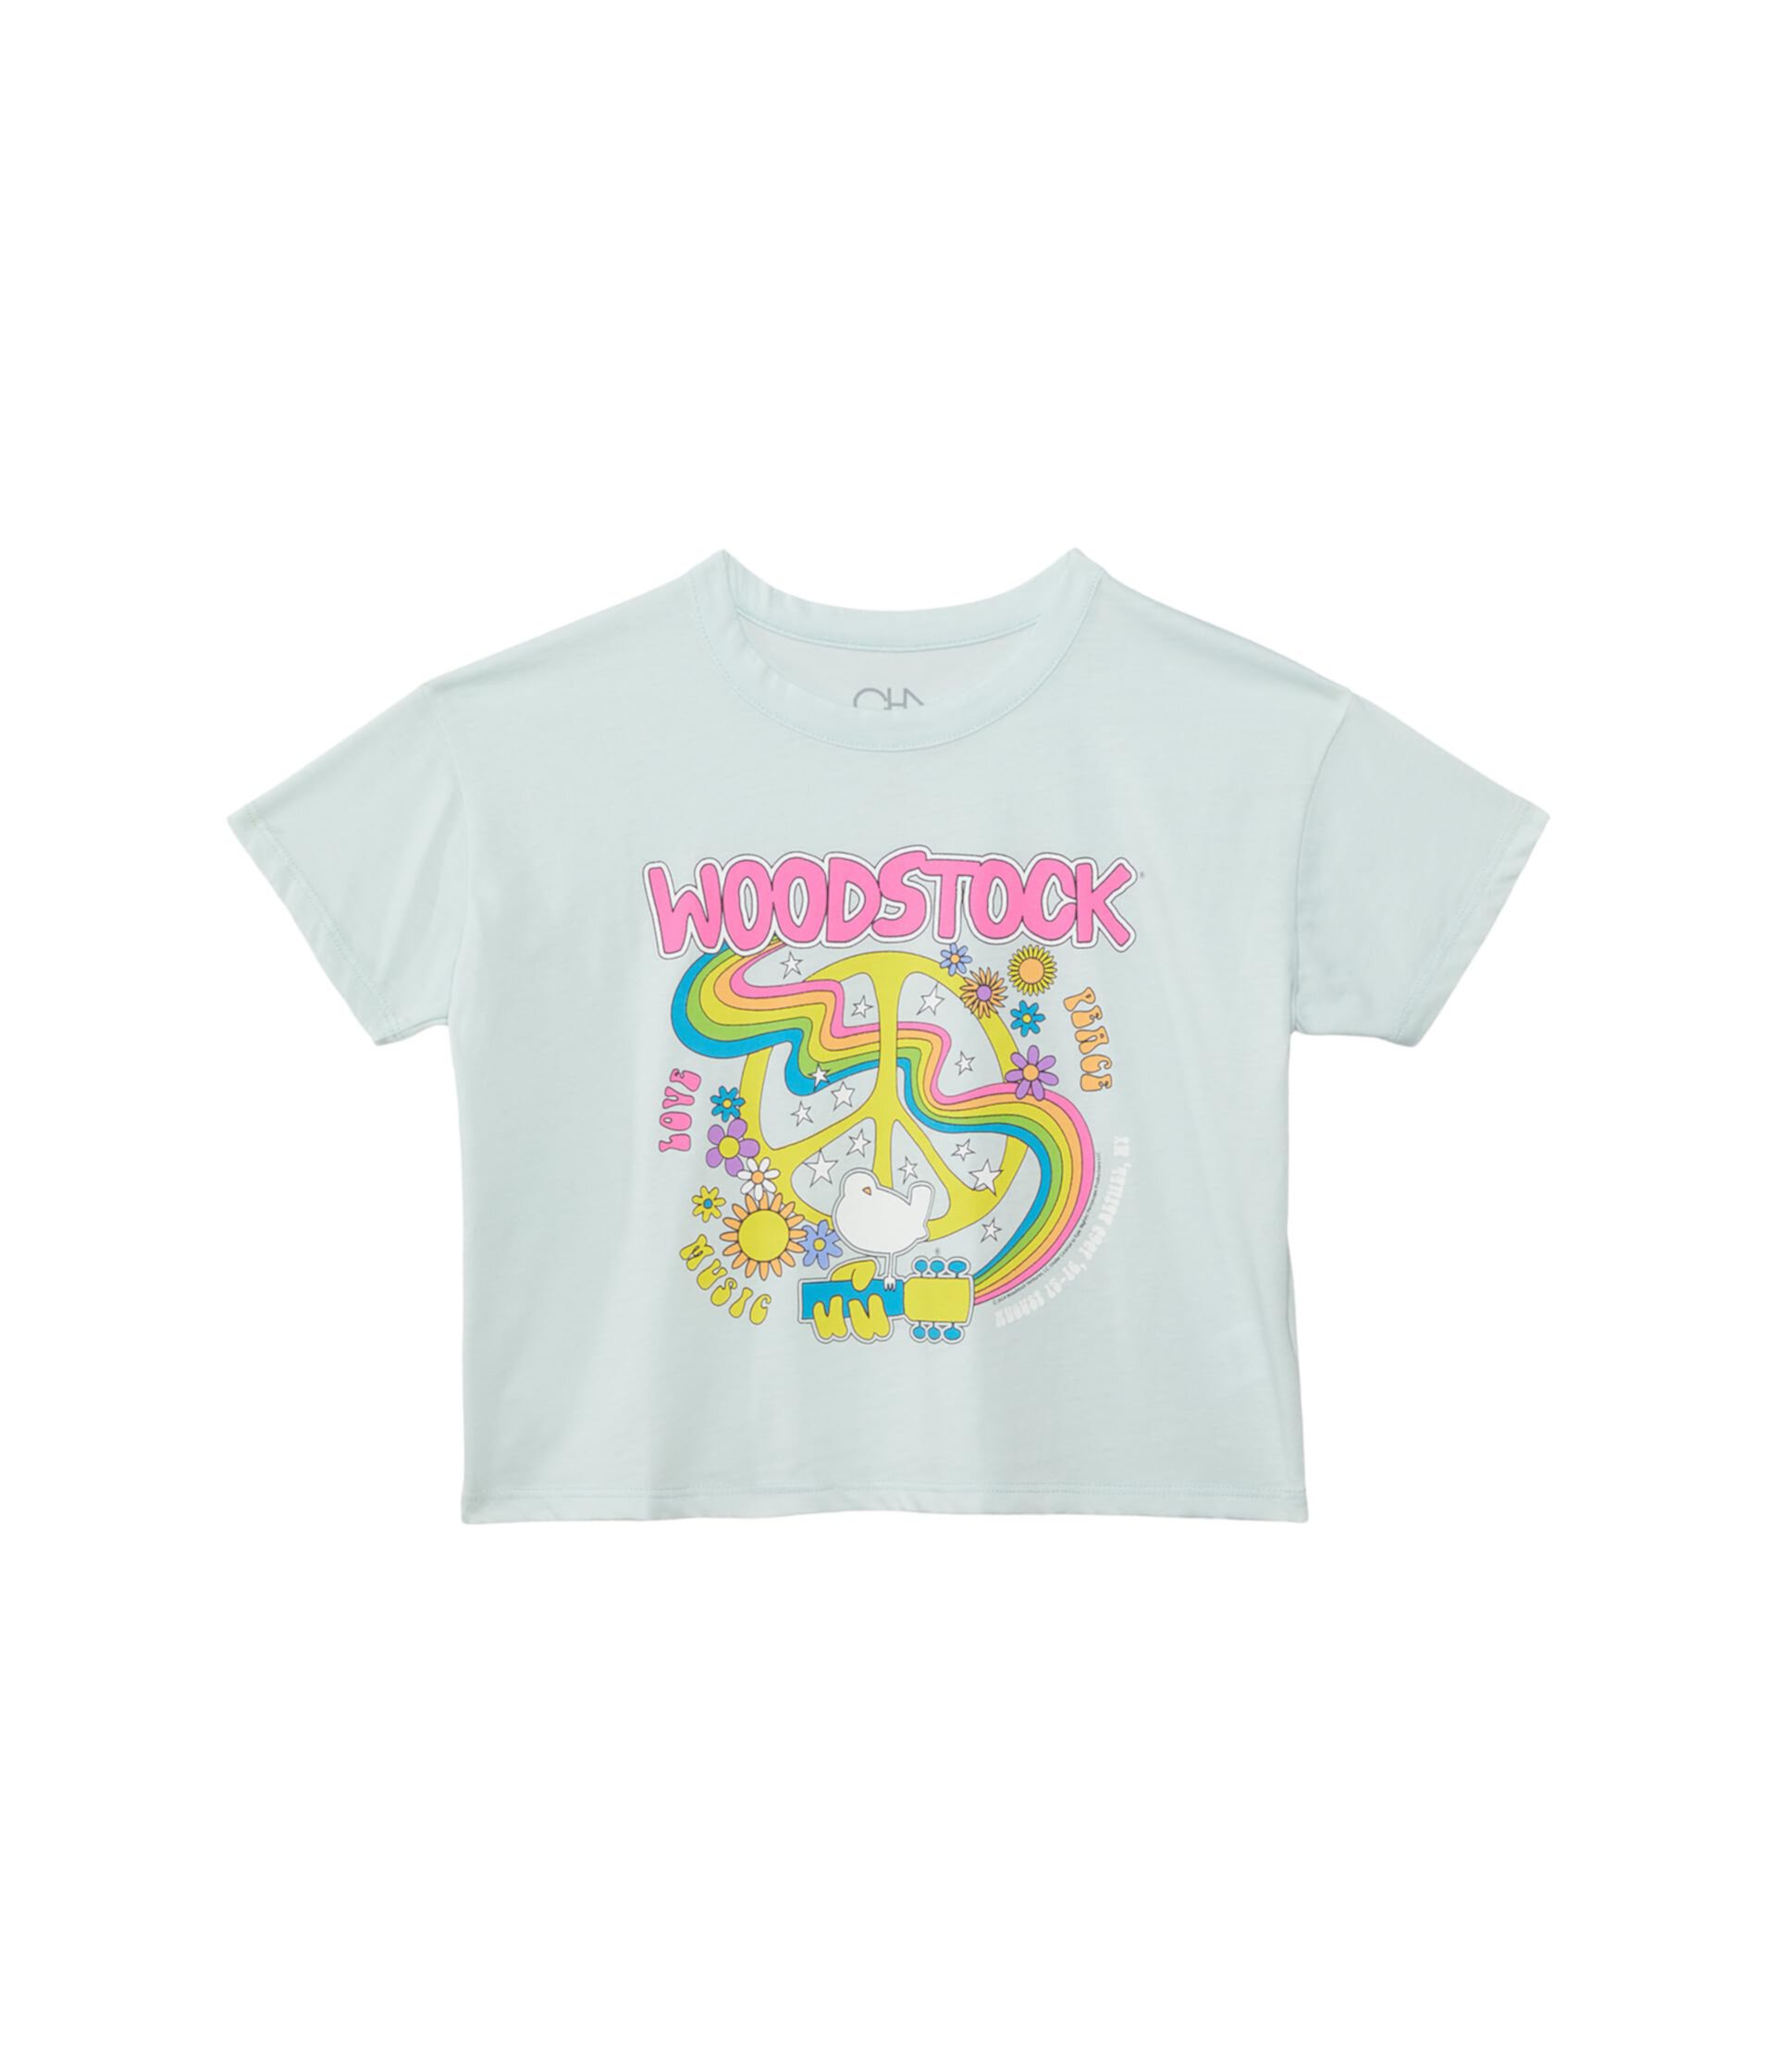 Woodstock - Peace Sign Tee (Toddler/Little Kids) Chaser